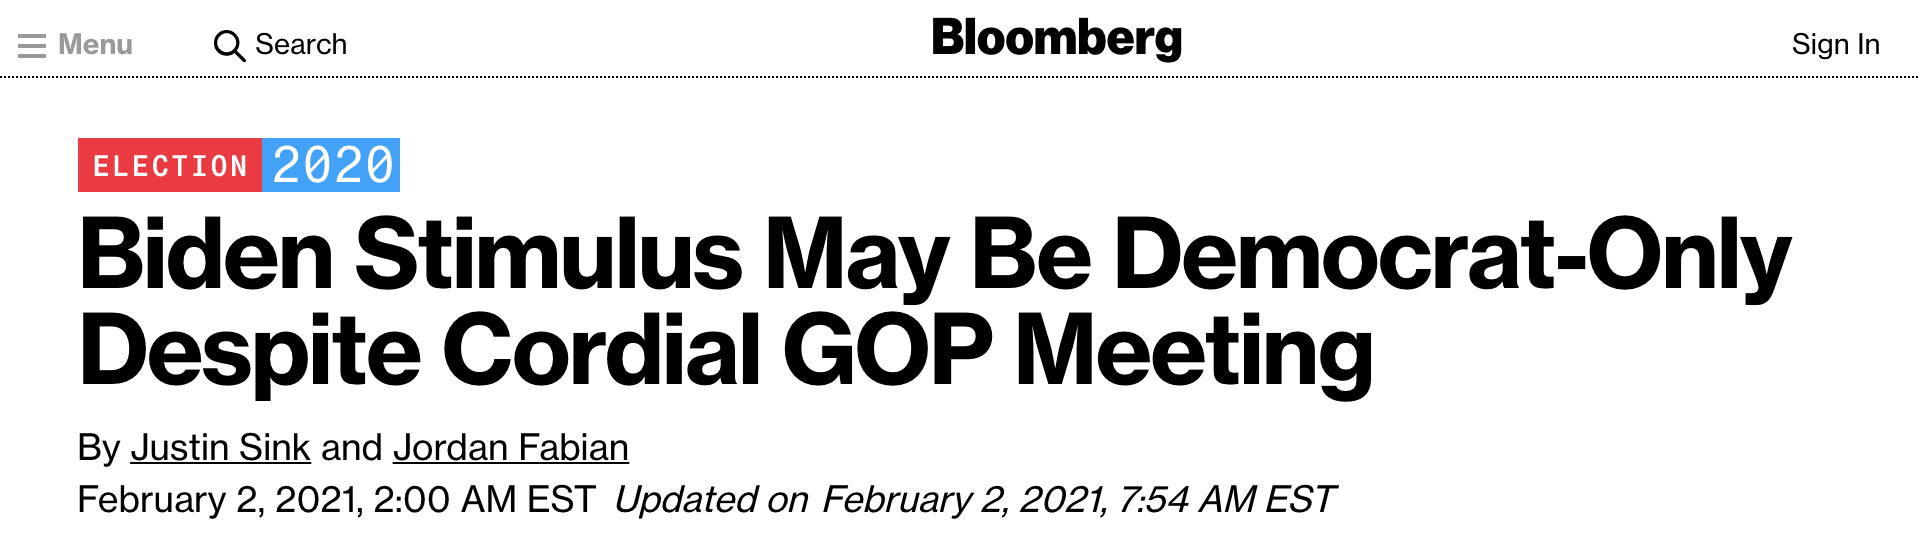 https://www.bloomberg.com/news/articles/2021-02-02/biden-stimulus-may-be-democrat-only-despite-cordial-gop-meeting?srnd=politics-vp&sref=ZaSRszJs